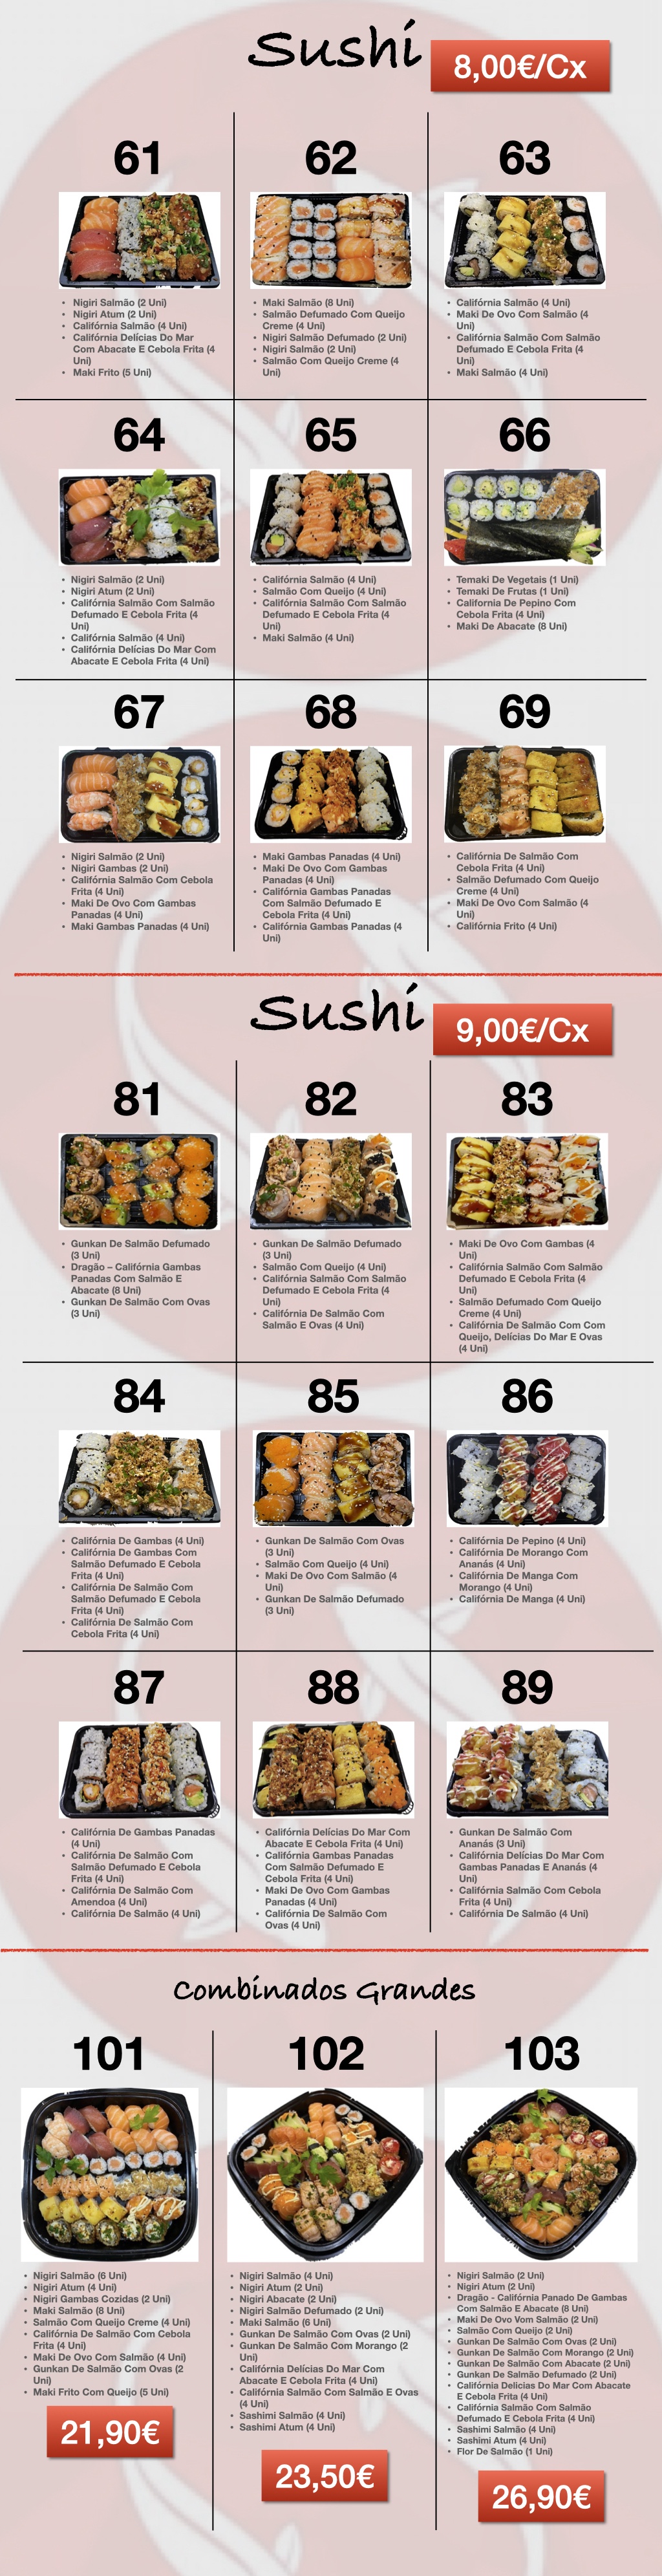 sushi combinados